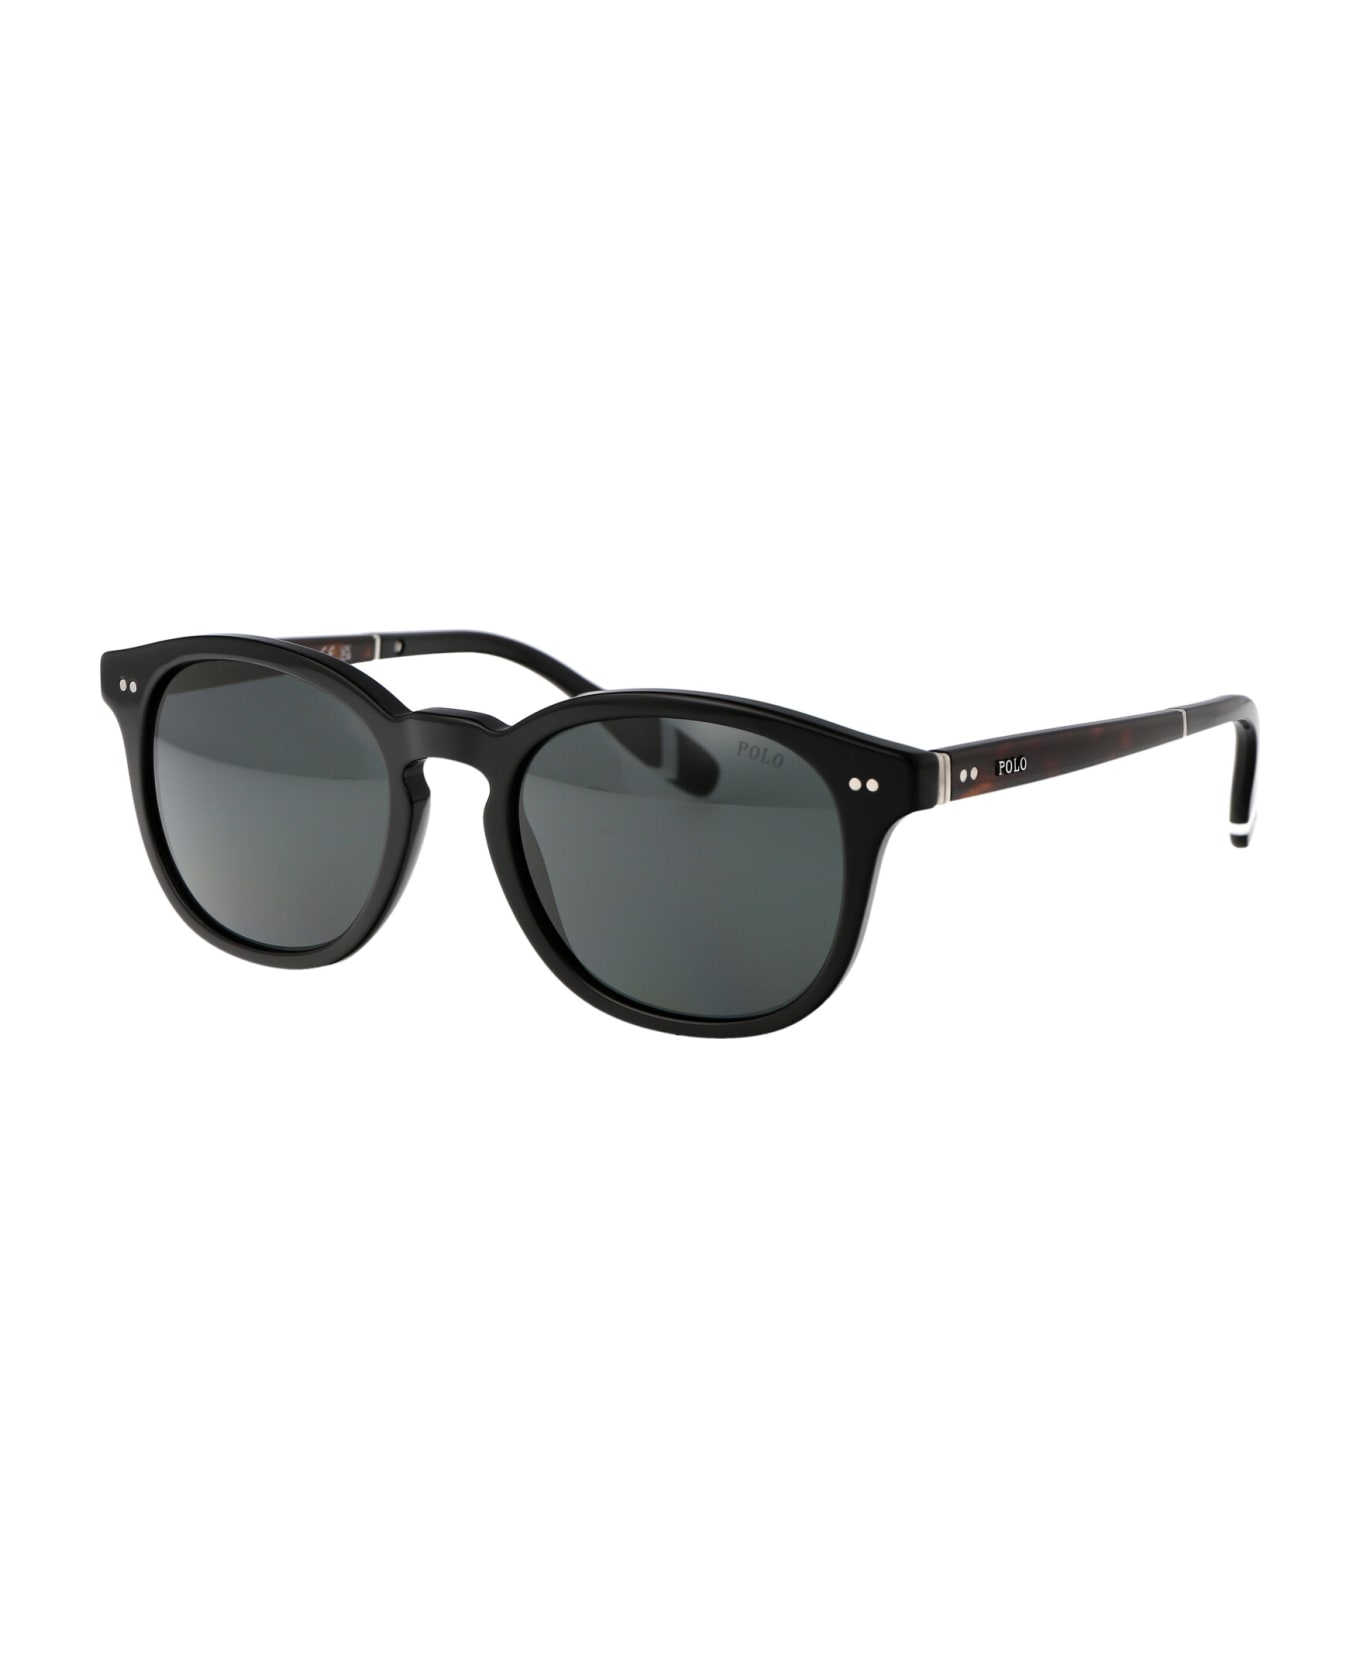 Polo Ralph Lauren 0ph4206 Sunglasses - 500187 SHINY BLACK